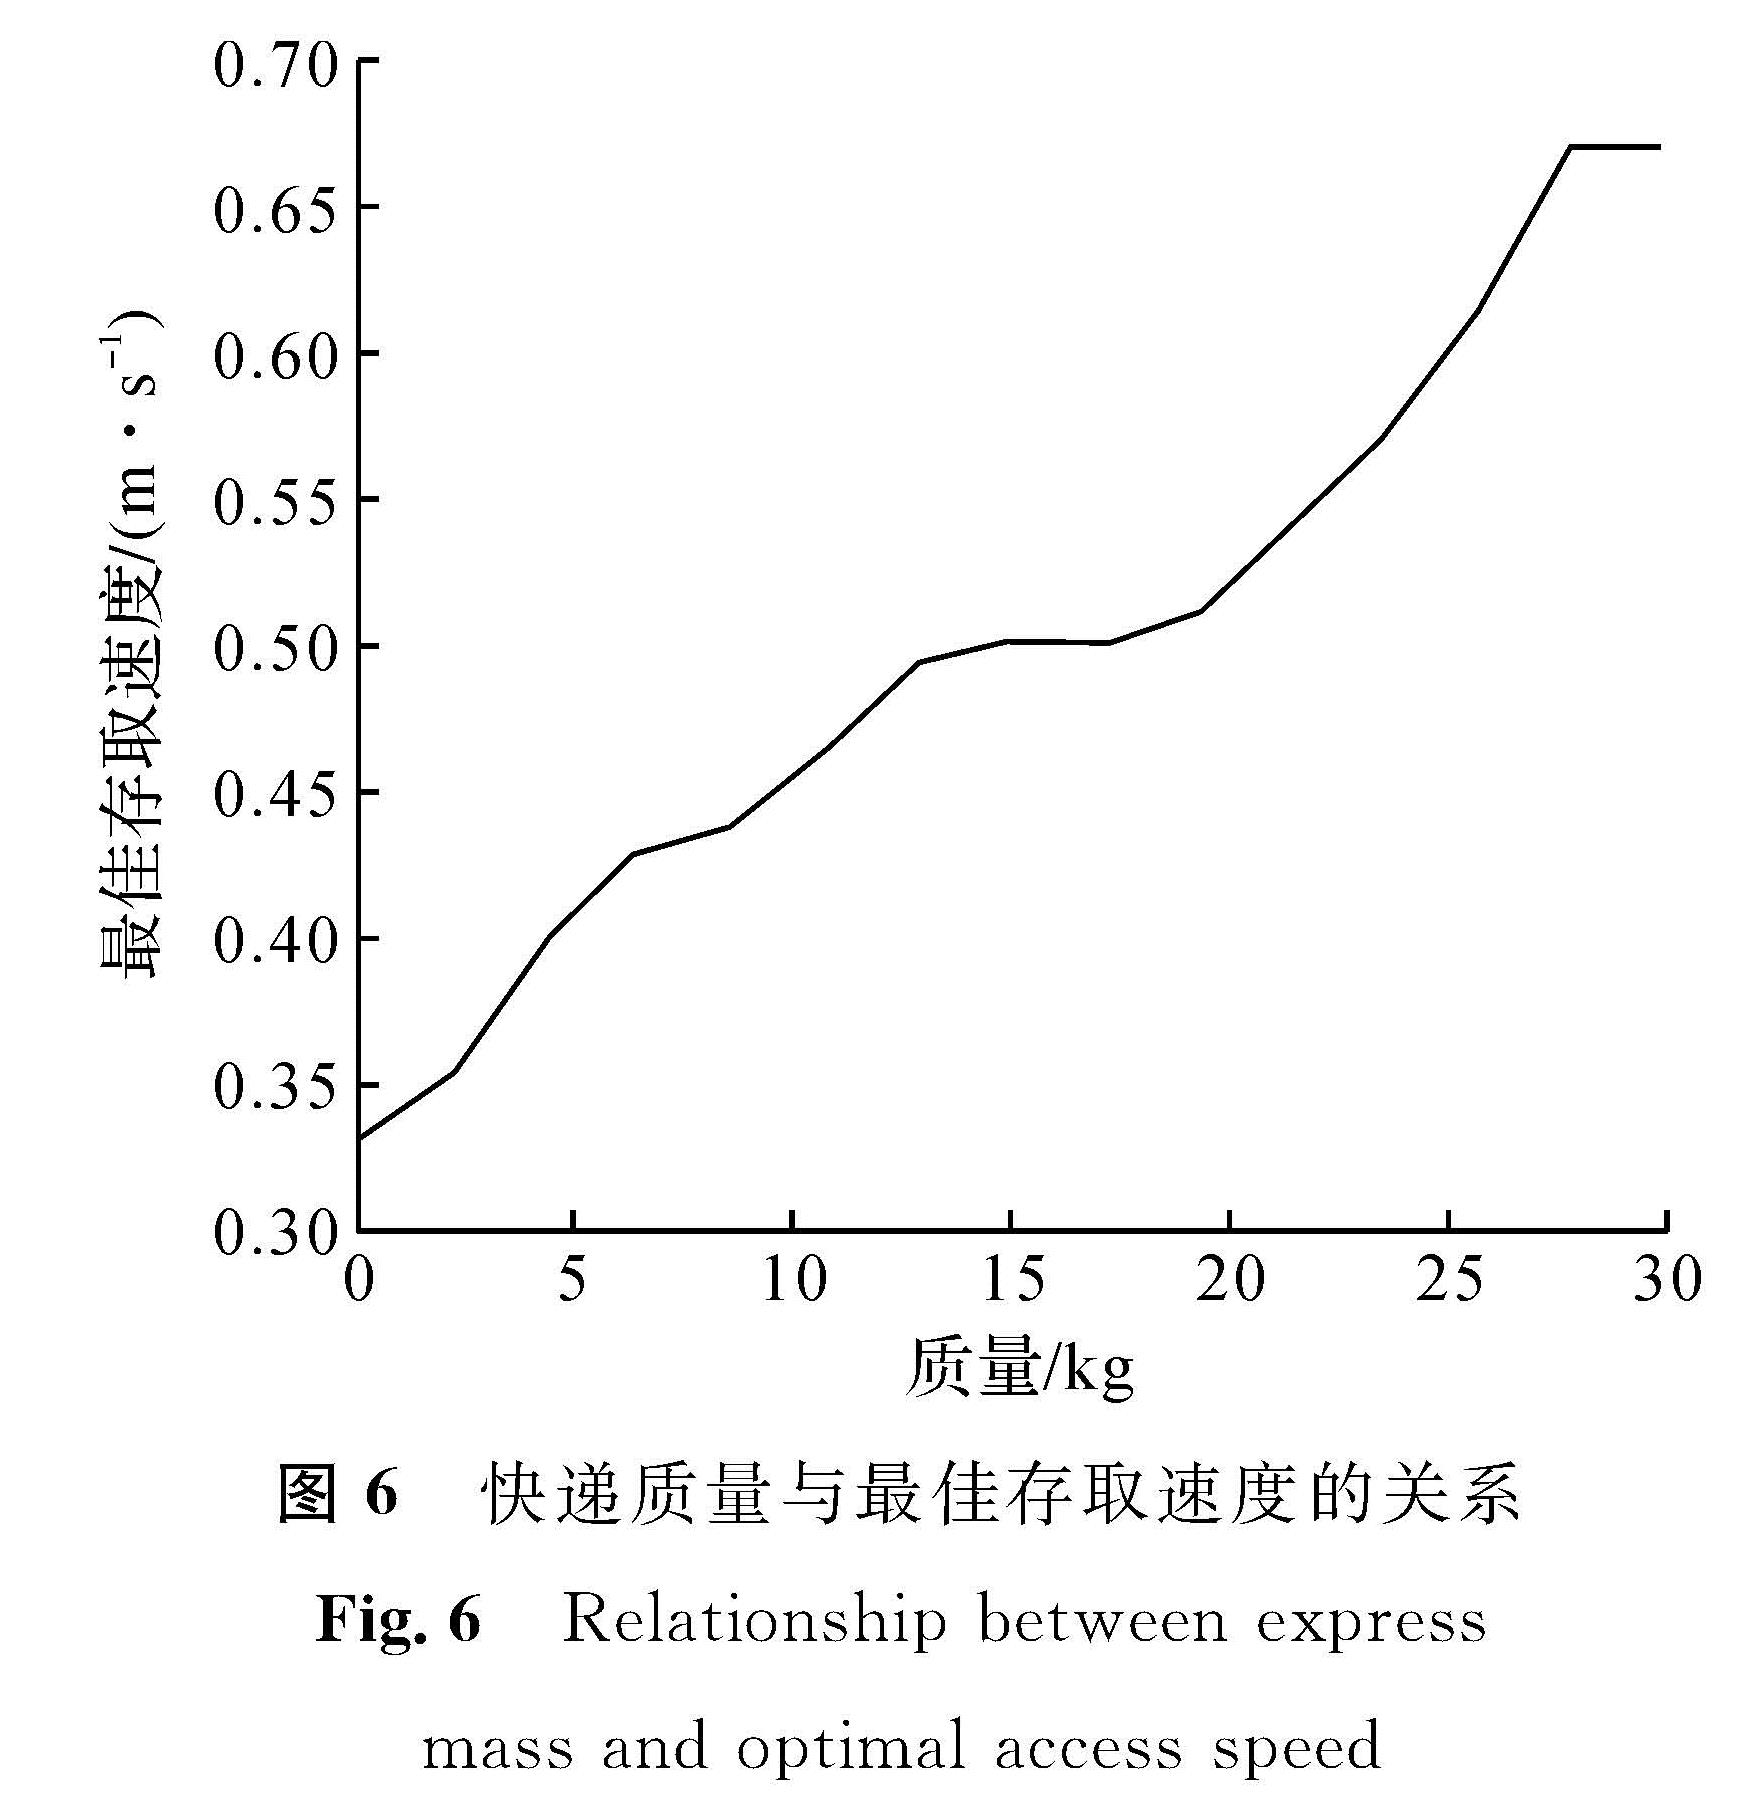 图6 快递质量与最佳存取速度的关系<br/>Fig.6 Relationship between express mass and optimal access speed